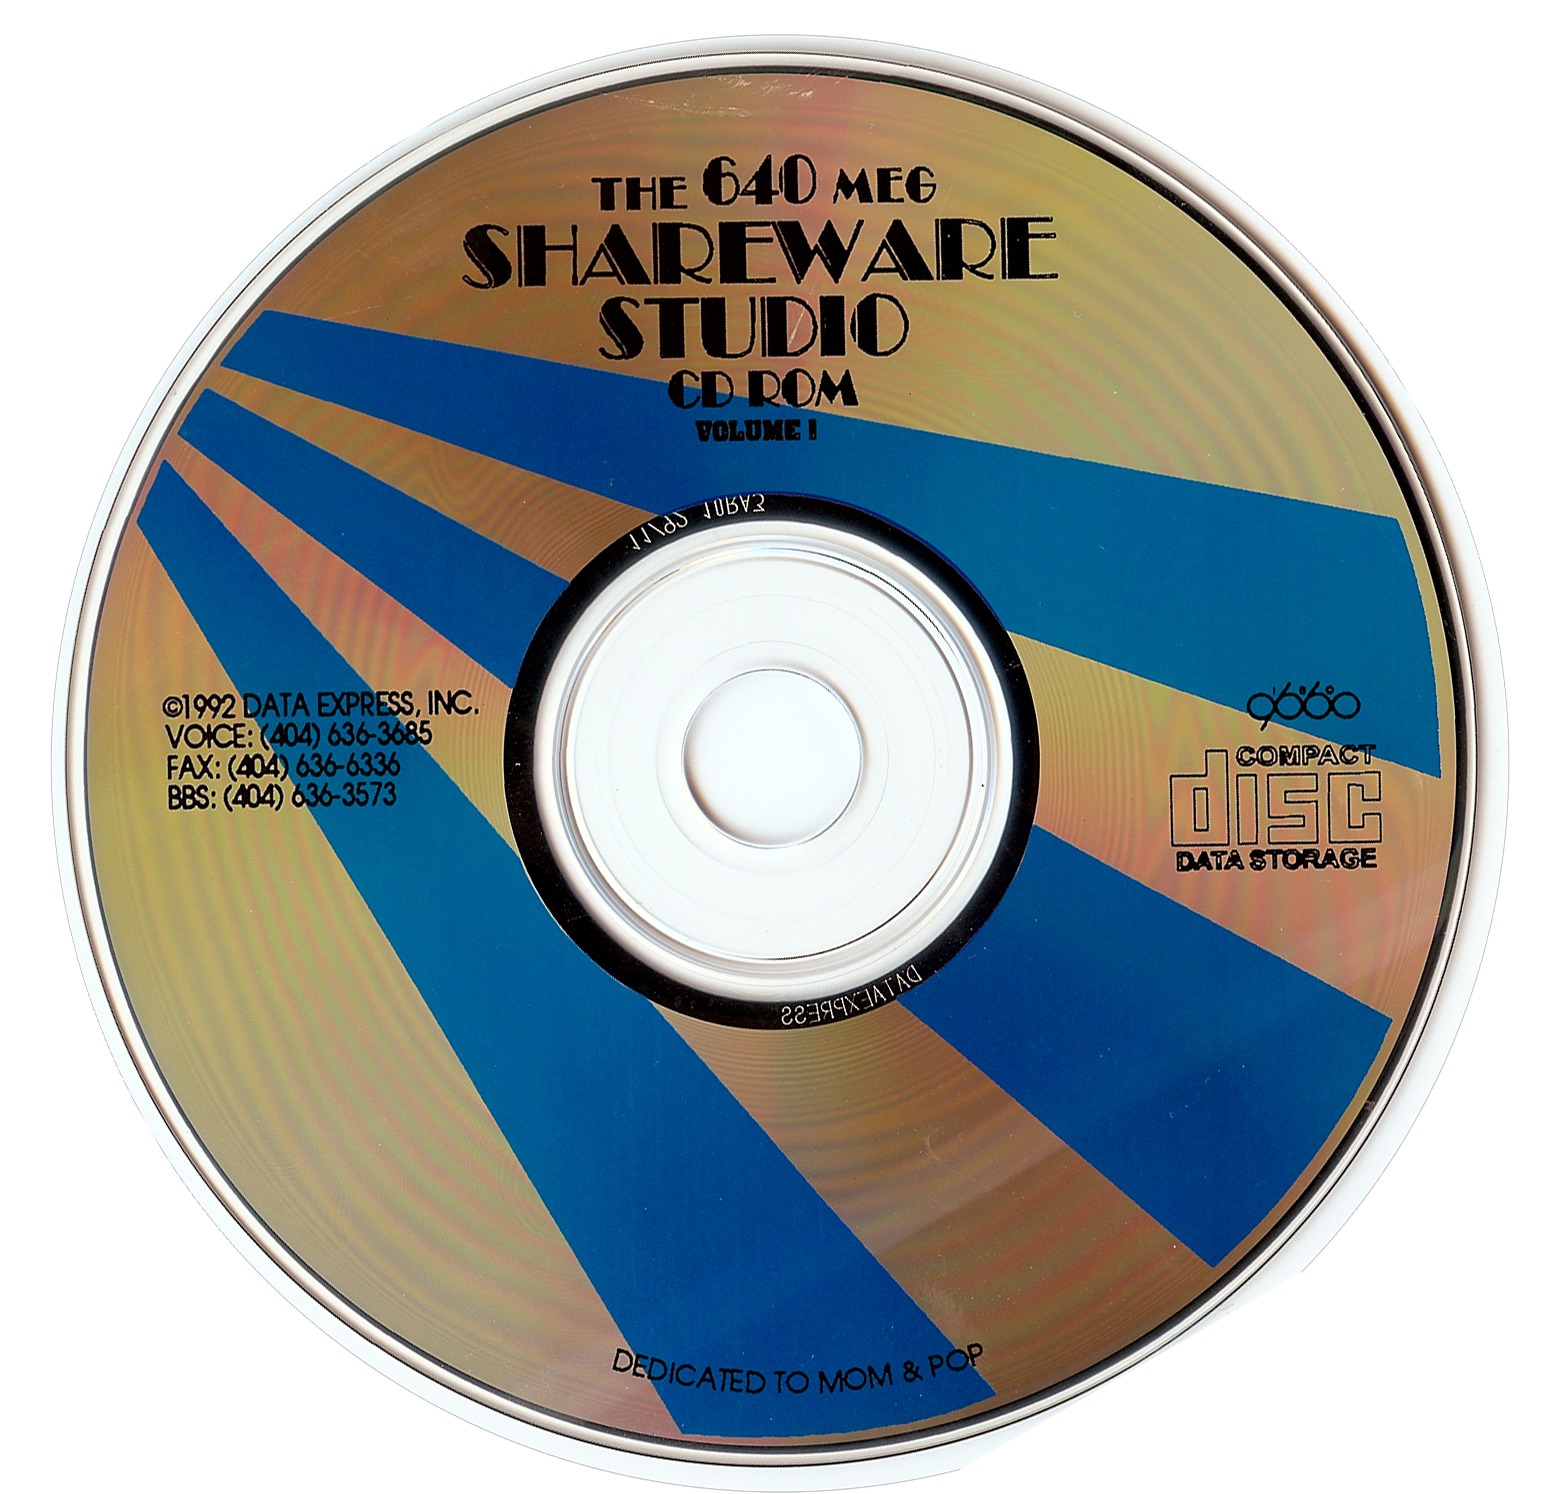 The 640 Meg Shareware Studio CD ROM : Data Express : Free Download ...